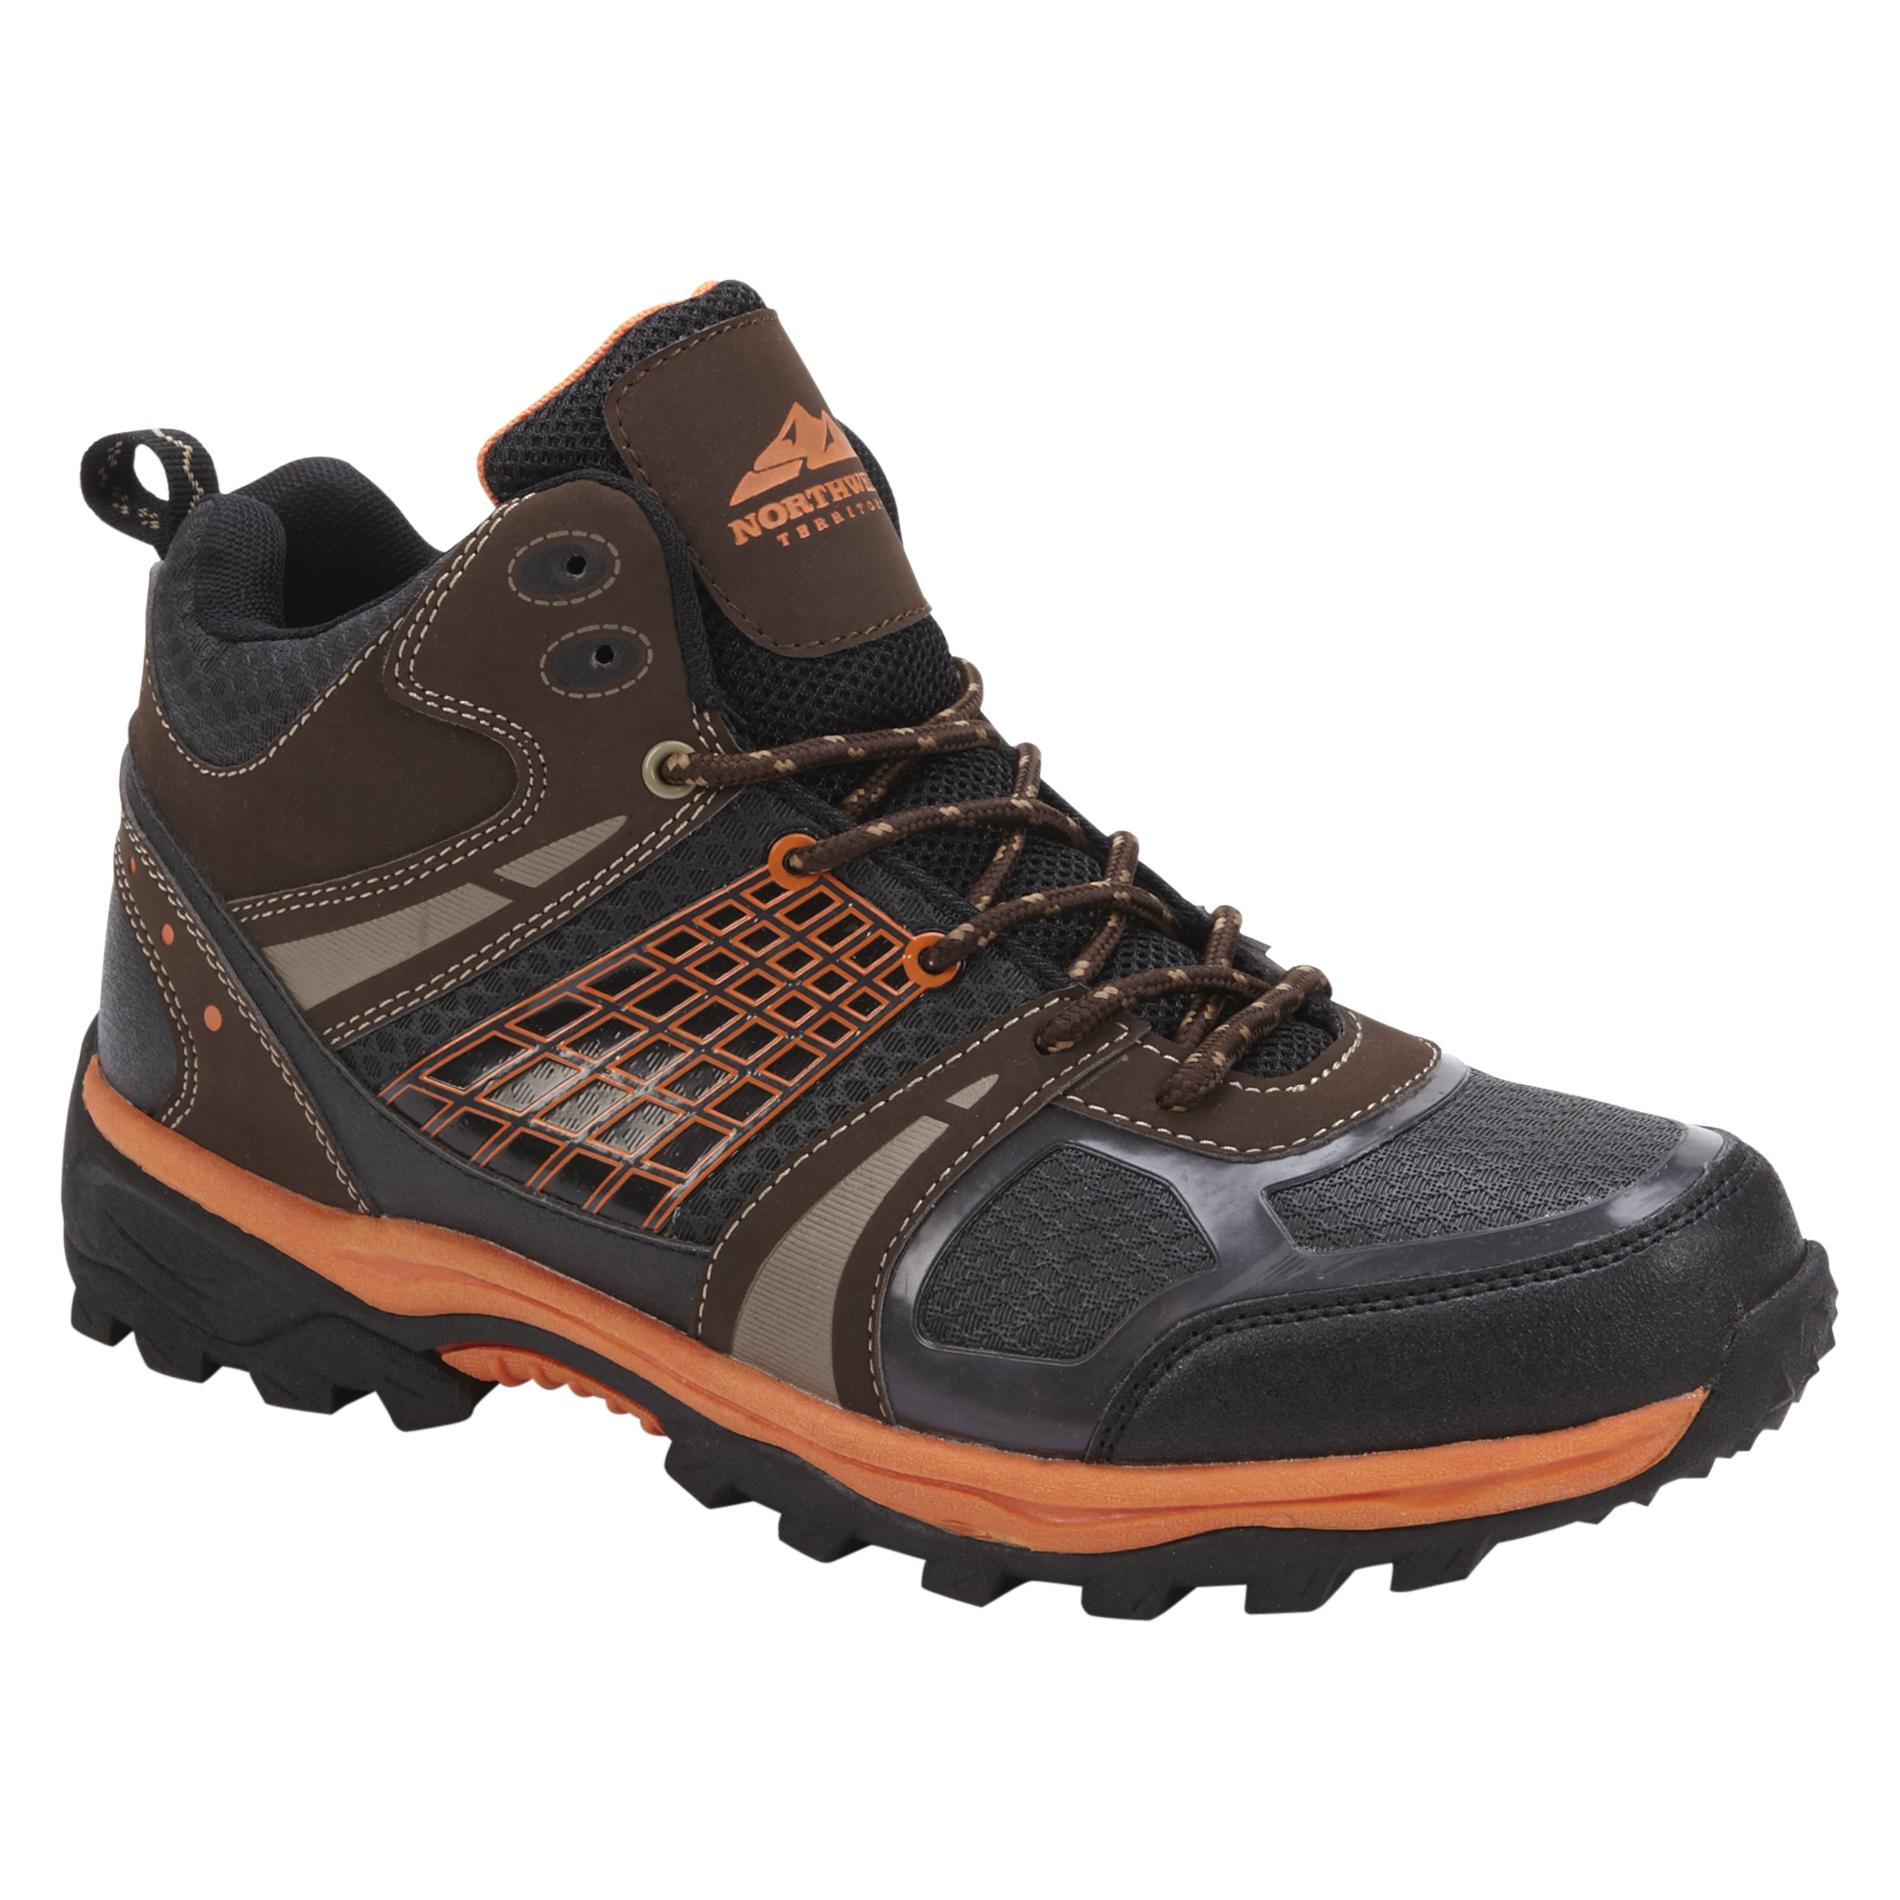 Northwest Territory Men's Mid Hiker Boot Trailhawker - Brown/Orange